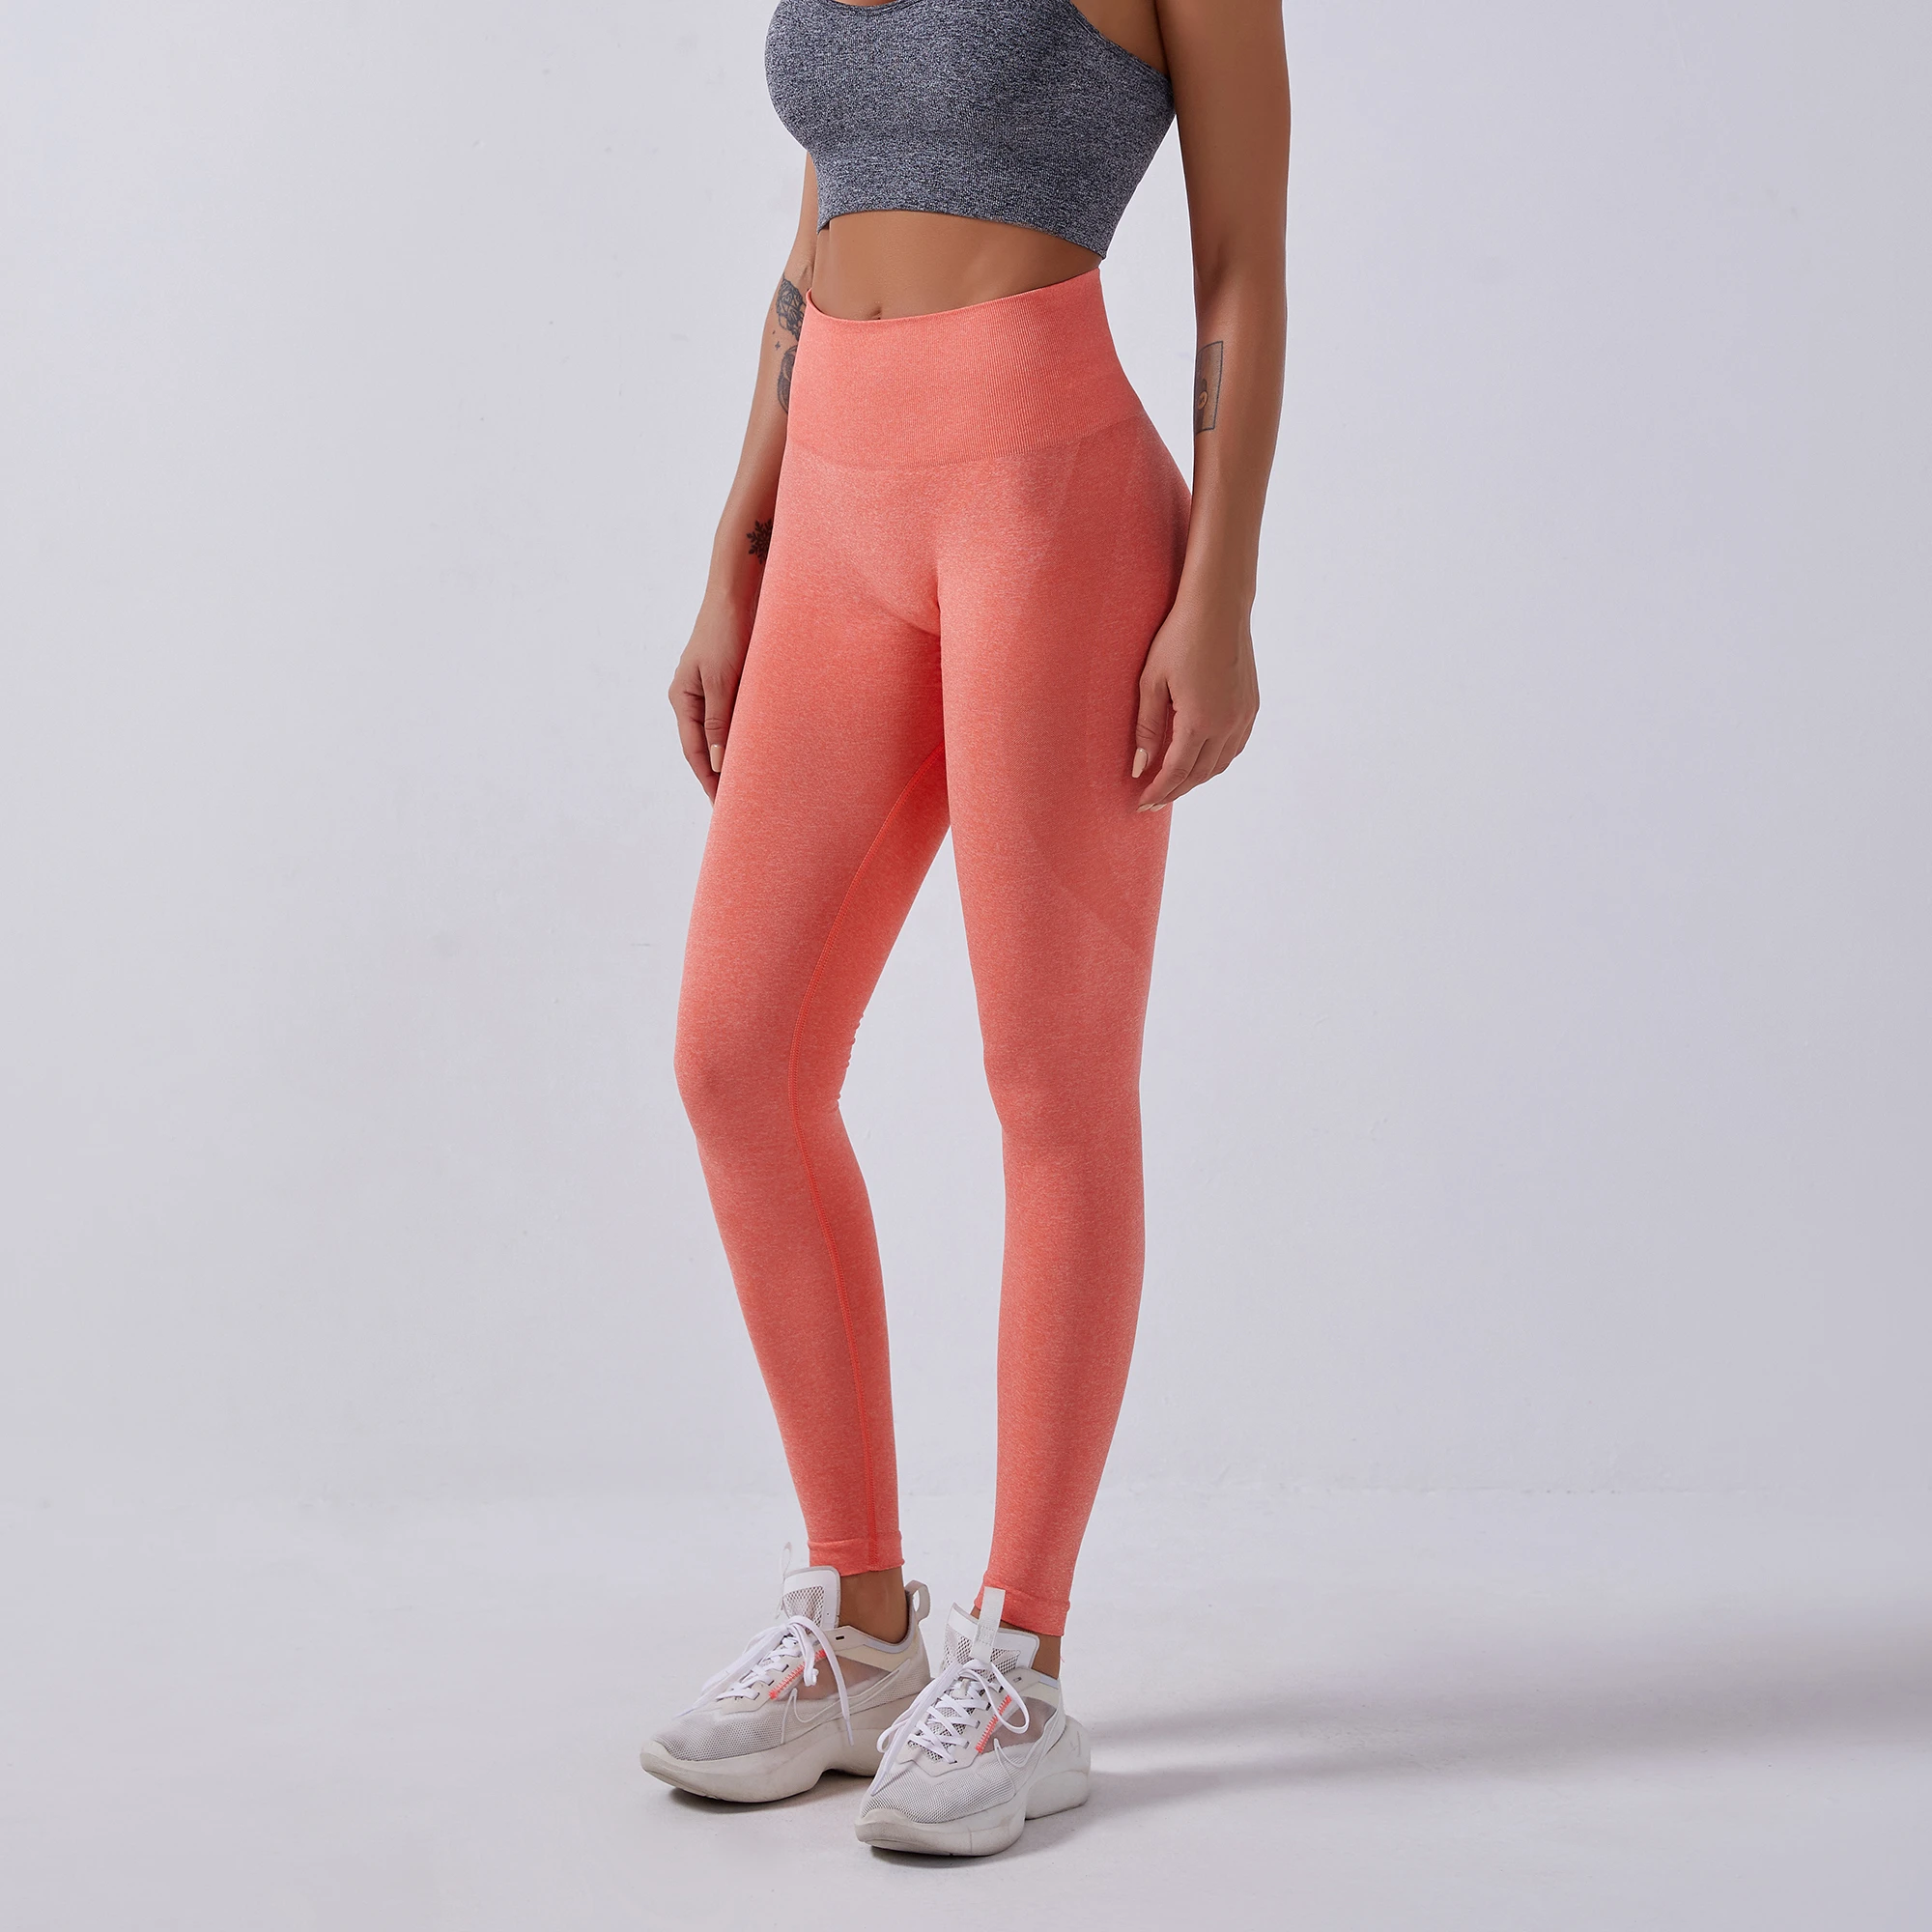 

Wholesale Sleeveless sweat absorption Legging High Waist Watermelon Solid Pants women workout clothing fitness